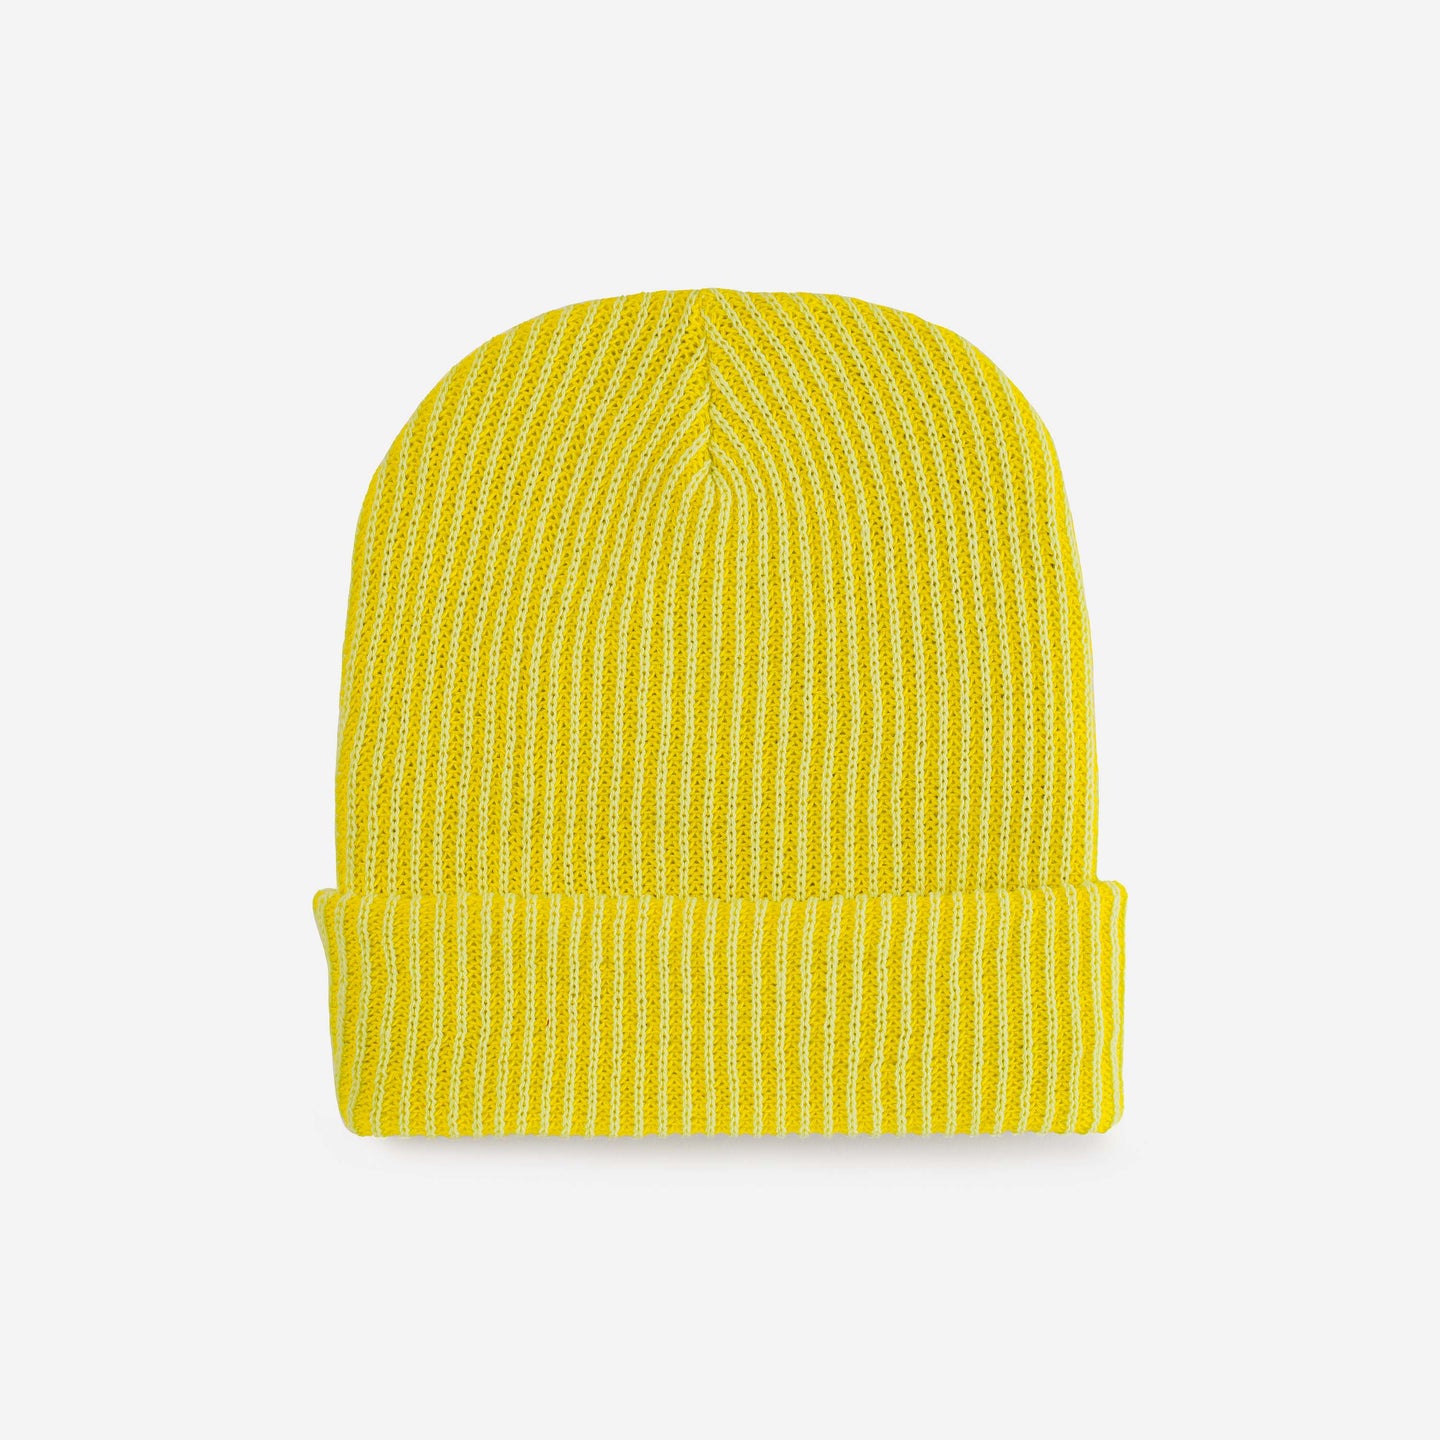 Simple Rib Hat Knit Slouchy Cap Beanie Colorful Stretchy Big Head